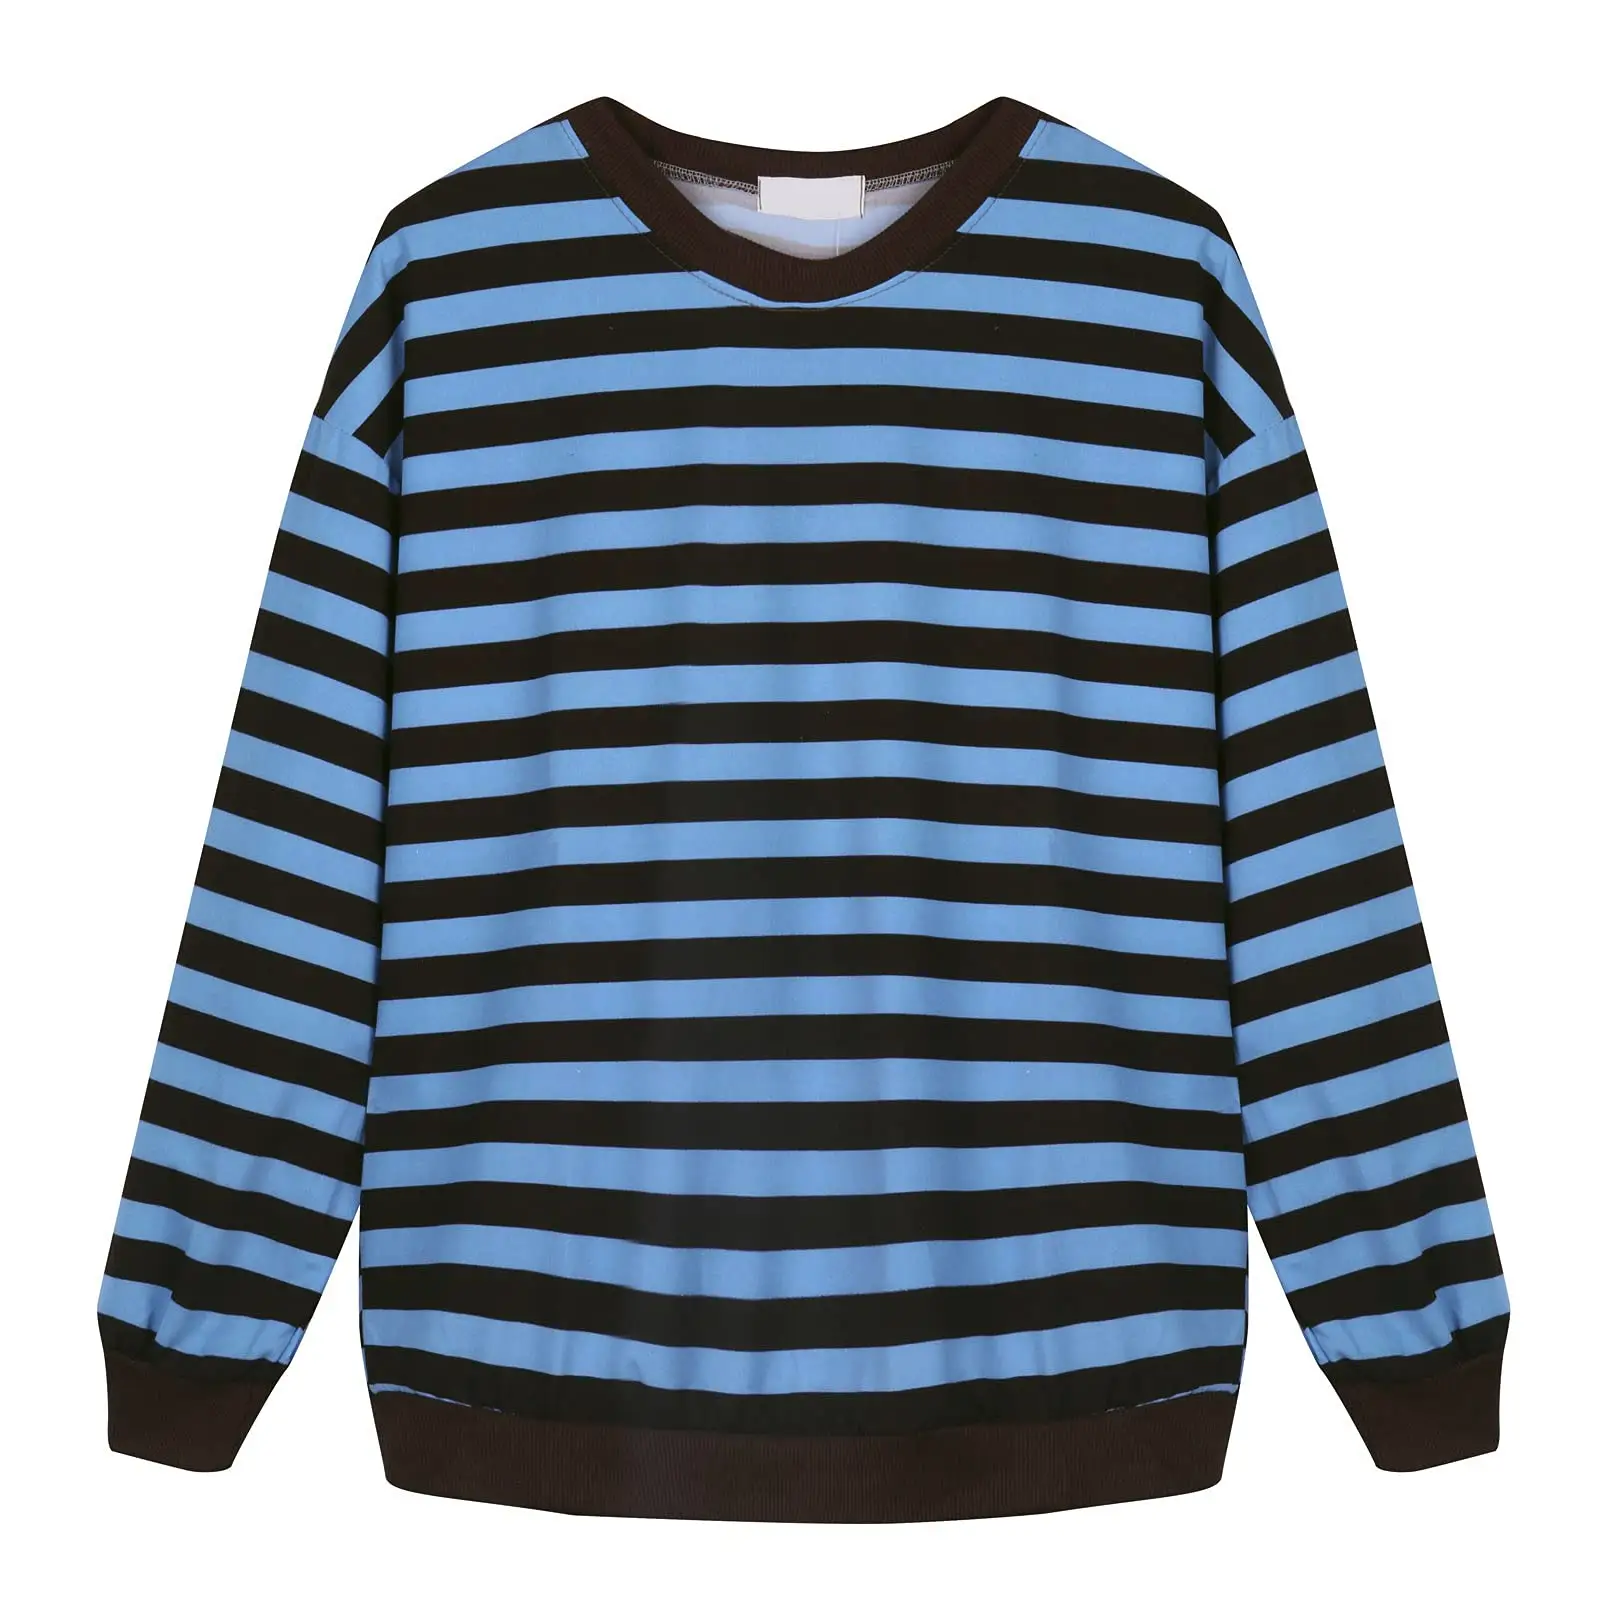 Wholesale yarn dye strip Autumn Winter Round Neck Stripe Sweatshirt Pullover Tops Long Sleeved men's T-Shirts